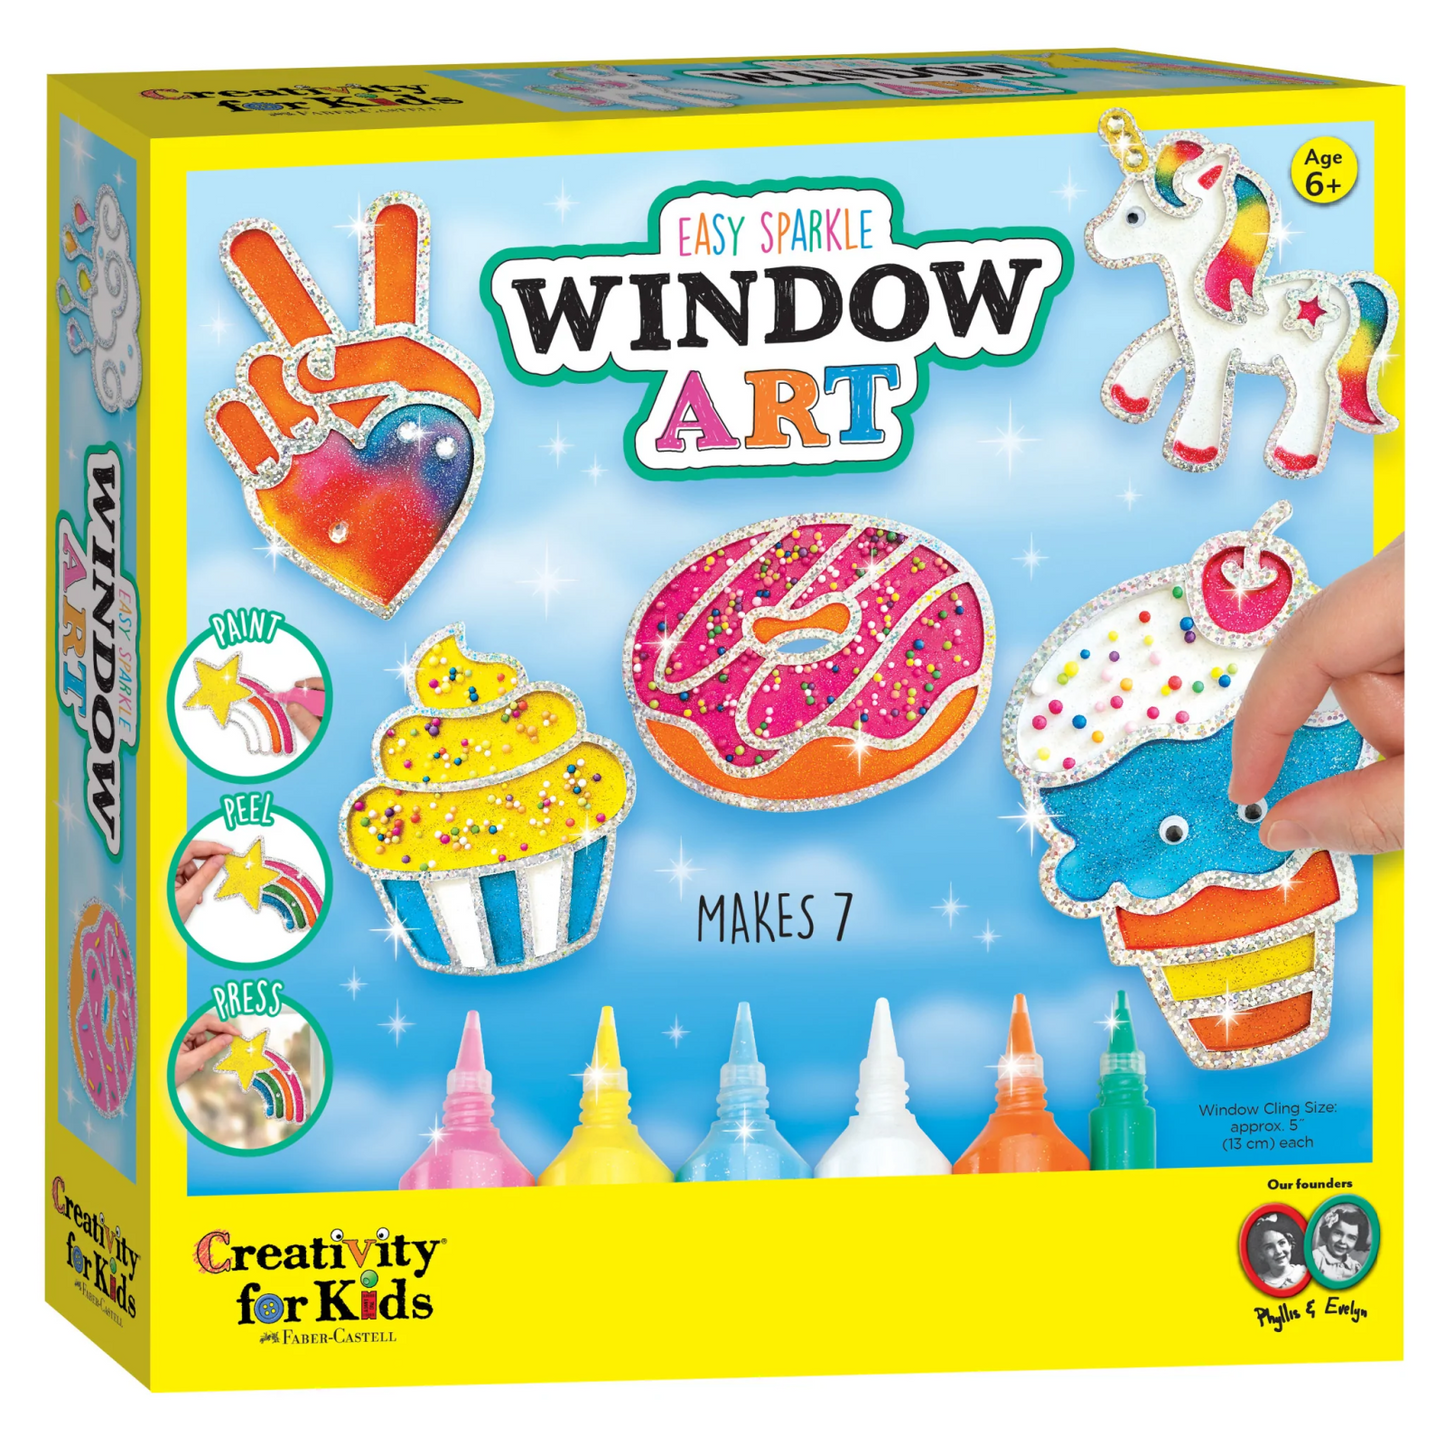 WINDOW ART EASY SPARKLE